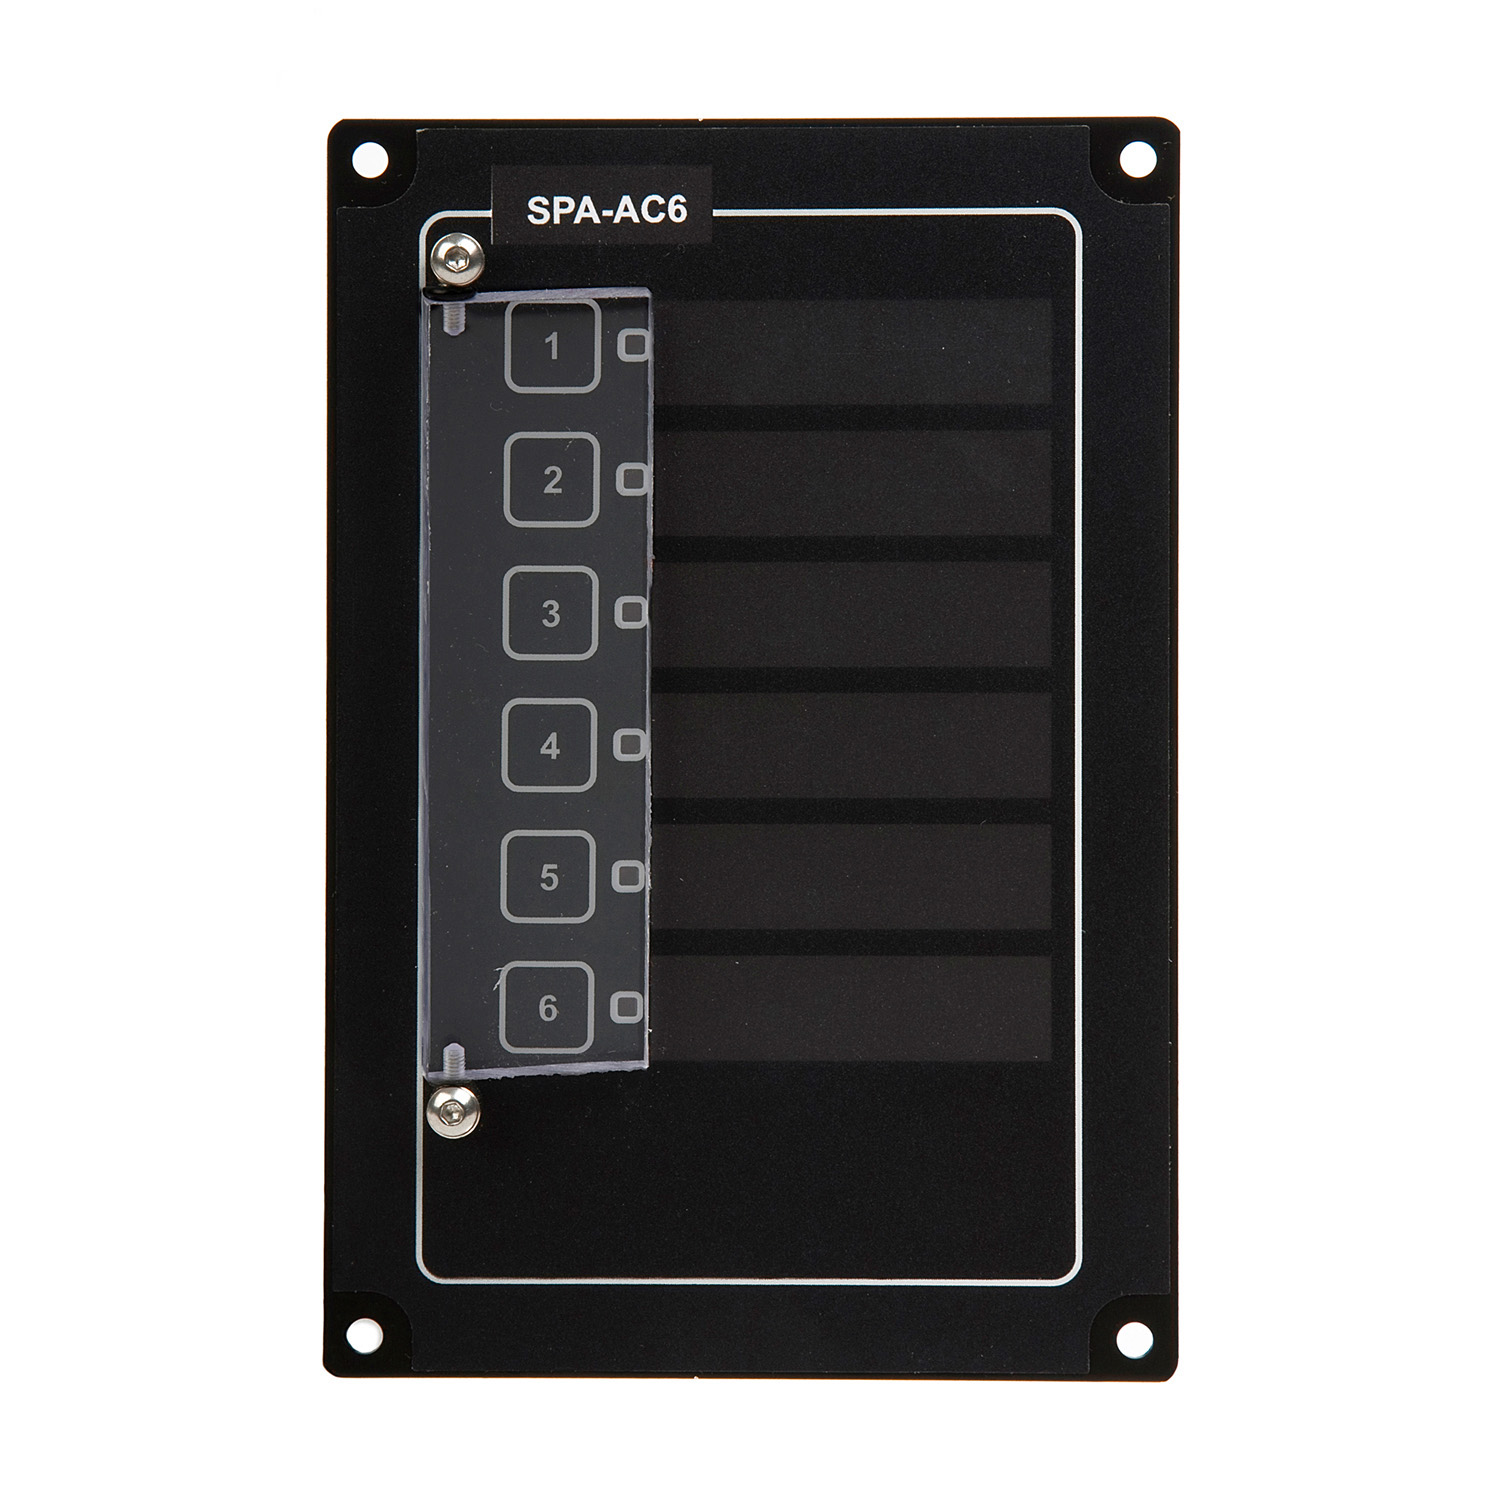 3005010095 SPA-AC6 Alarm control panel for 6 alarms